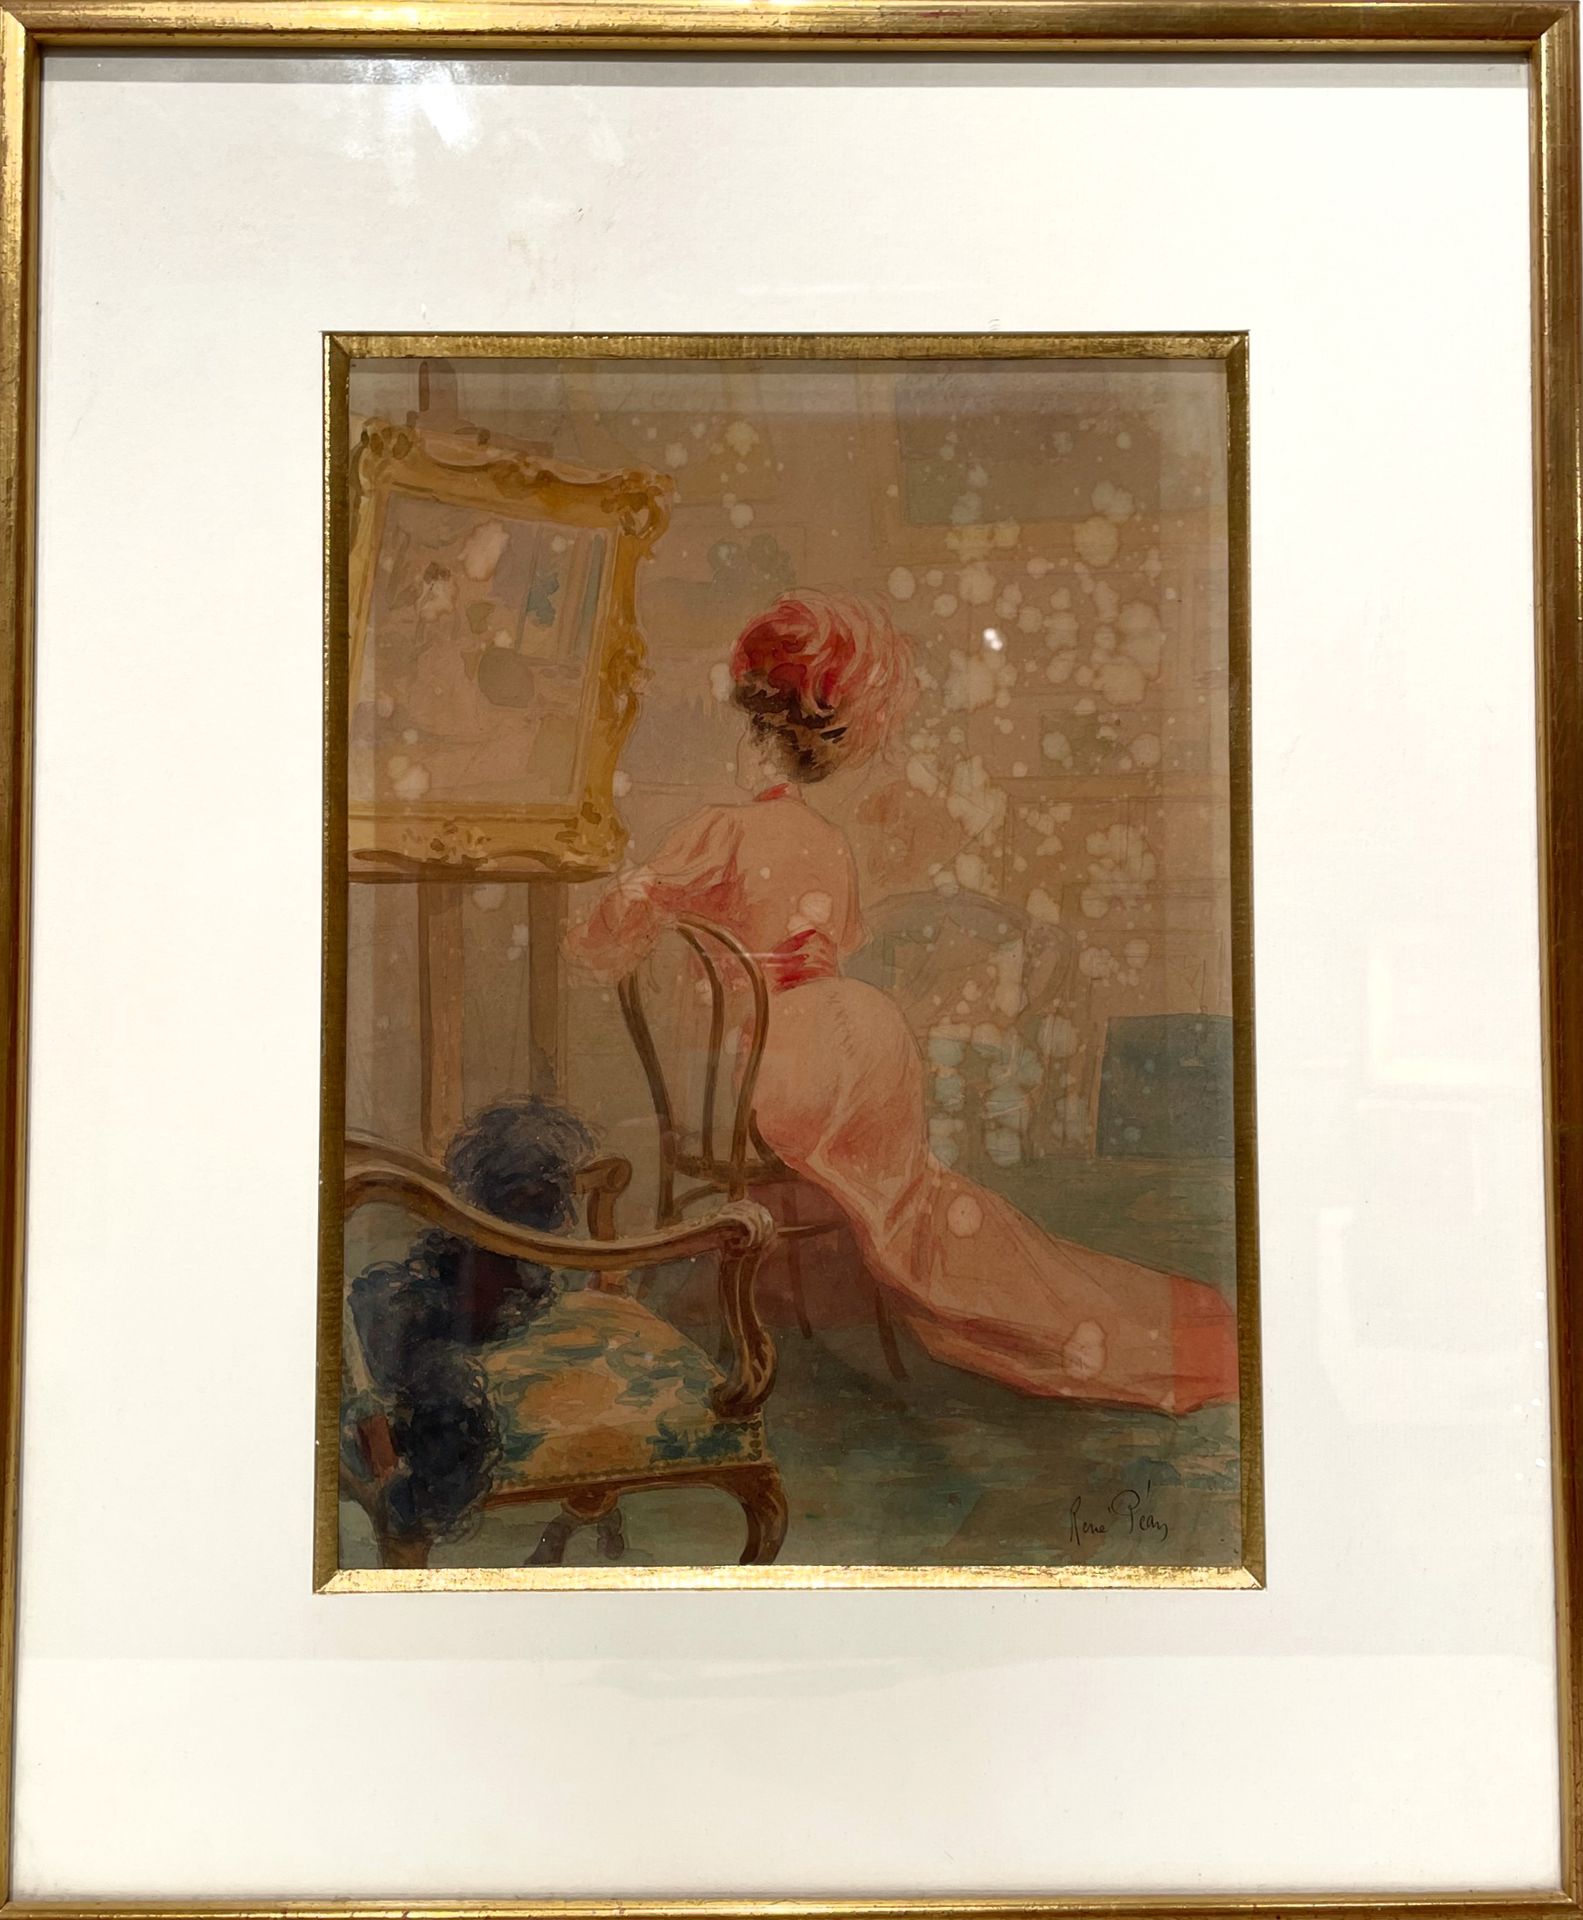 Null René PÉAN (1875-1955)

Galante admiring a painting 

Watercolor 

30x22 cm